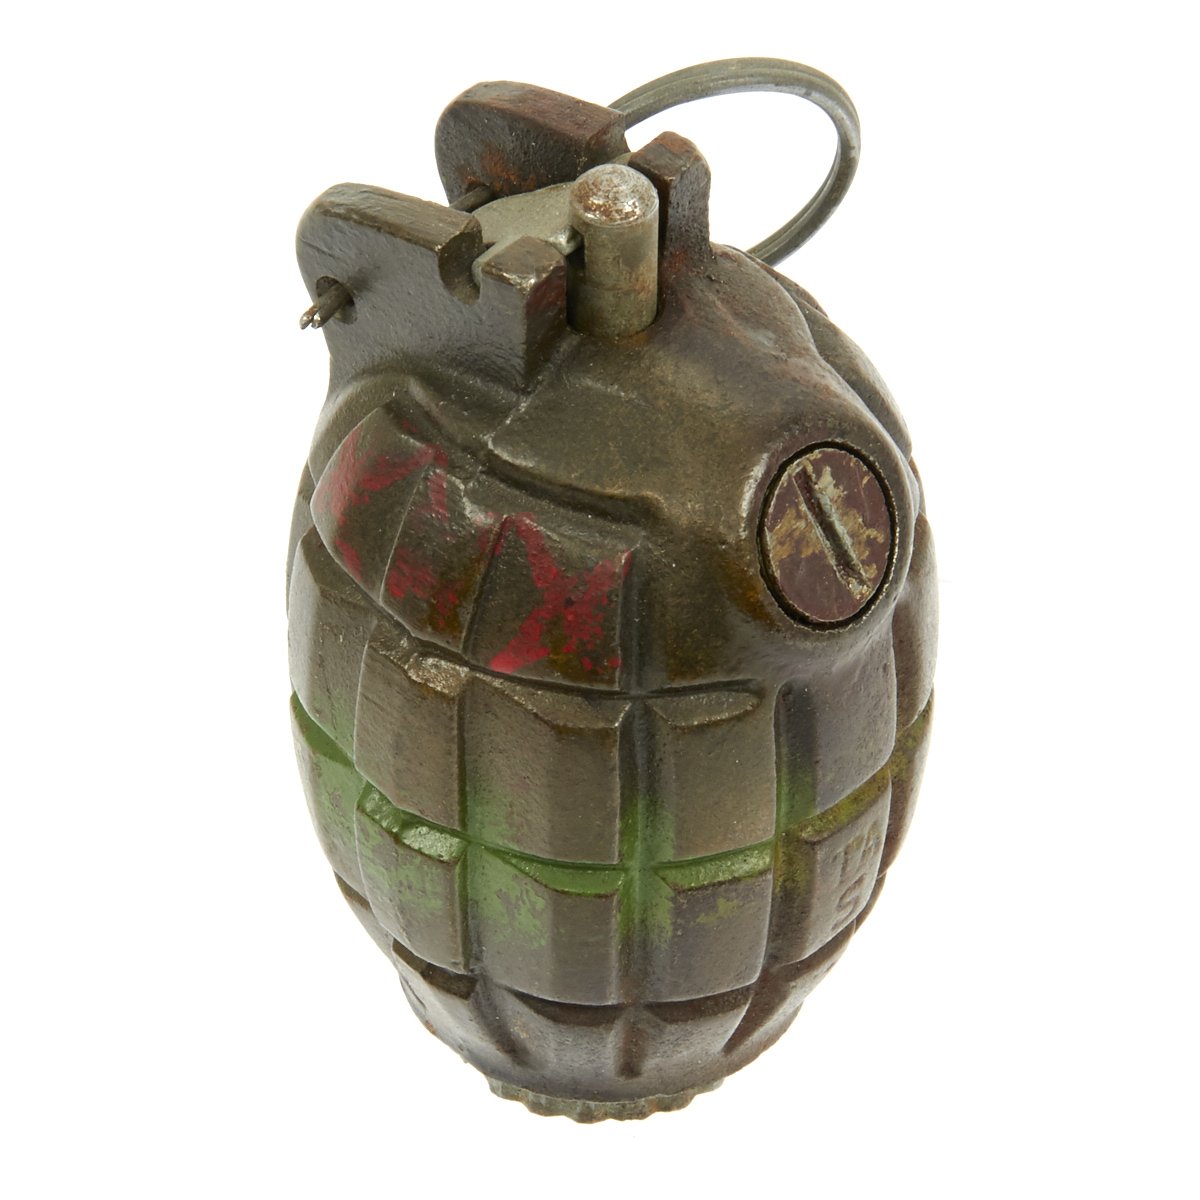 Image result for pattern 36 hand grenade